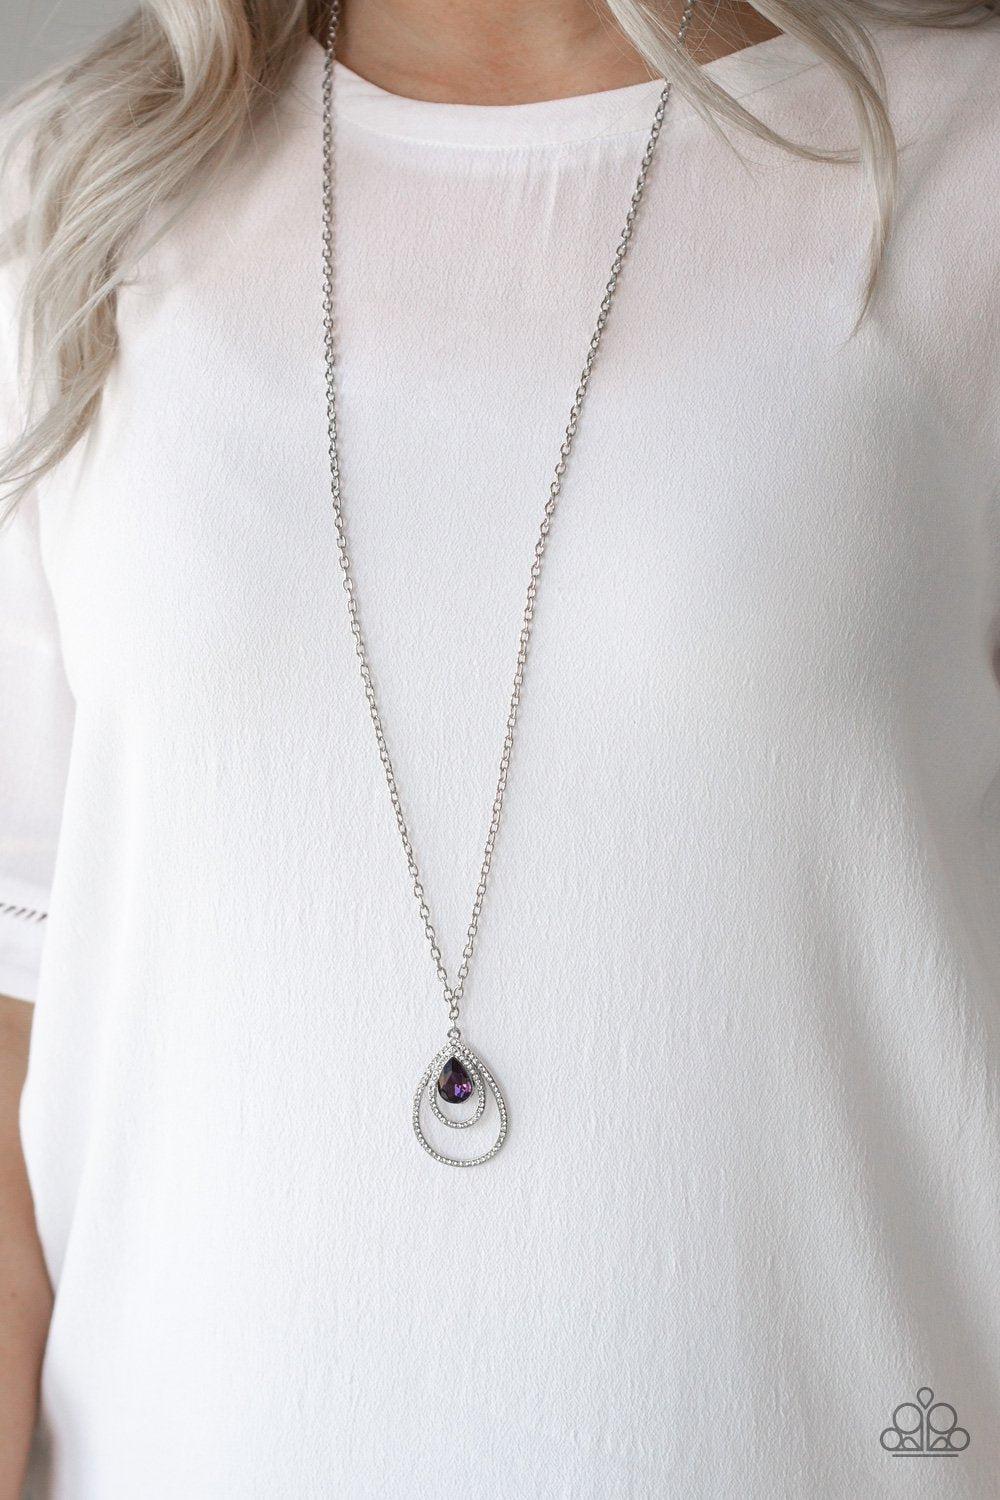 Teardrop Drama Silver and Purple Gem Necklace - Paparazzi Accessories-CarasShop.com - $5 Jewelry by Cara Jewels